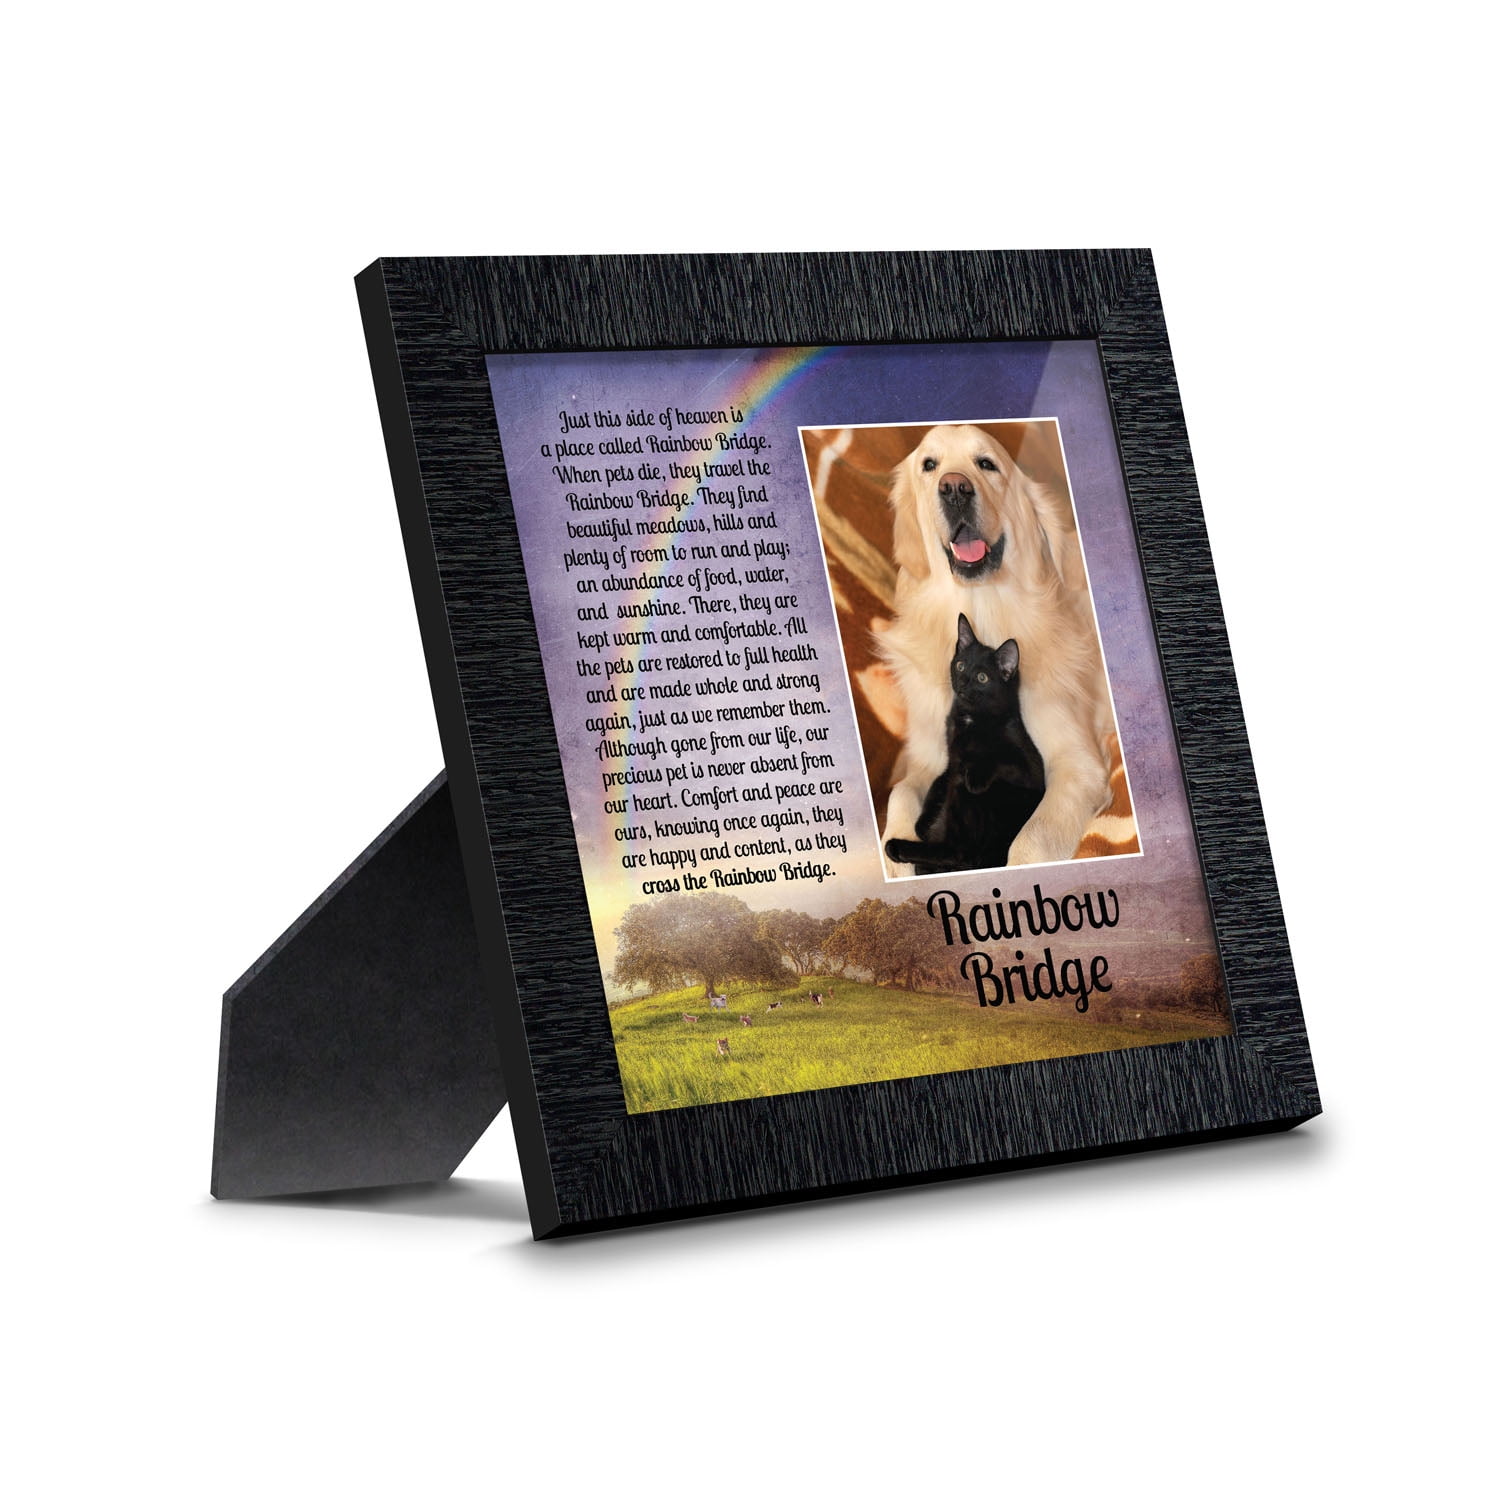 THE RAINBOW BRIDGE Personalilzed Pet Memorial Poem Gift For Loss of Dog OR Cat 